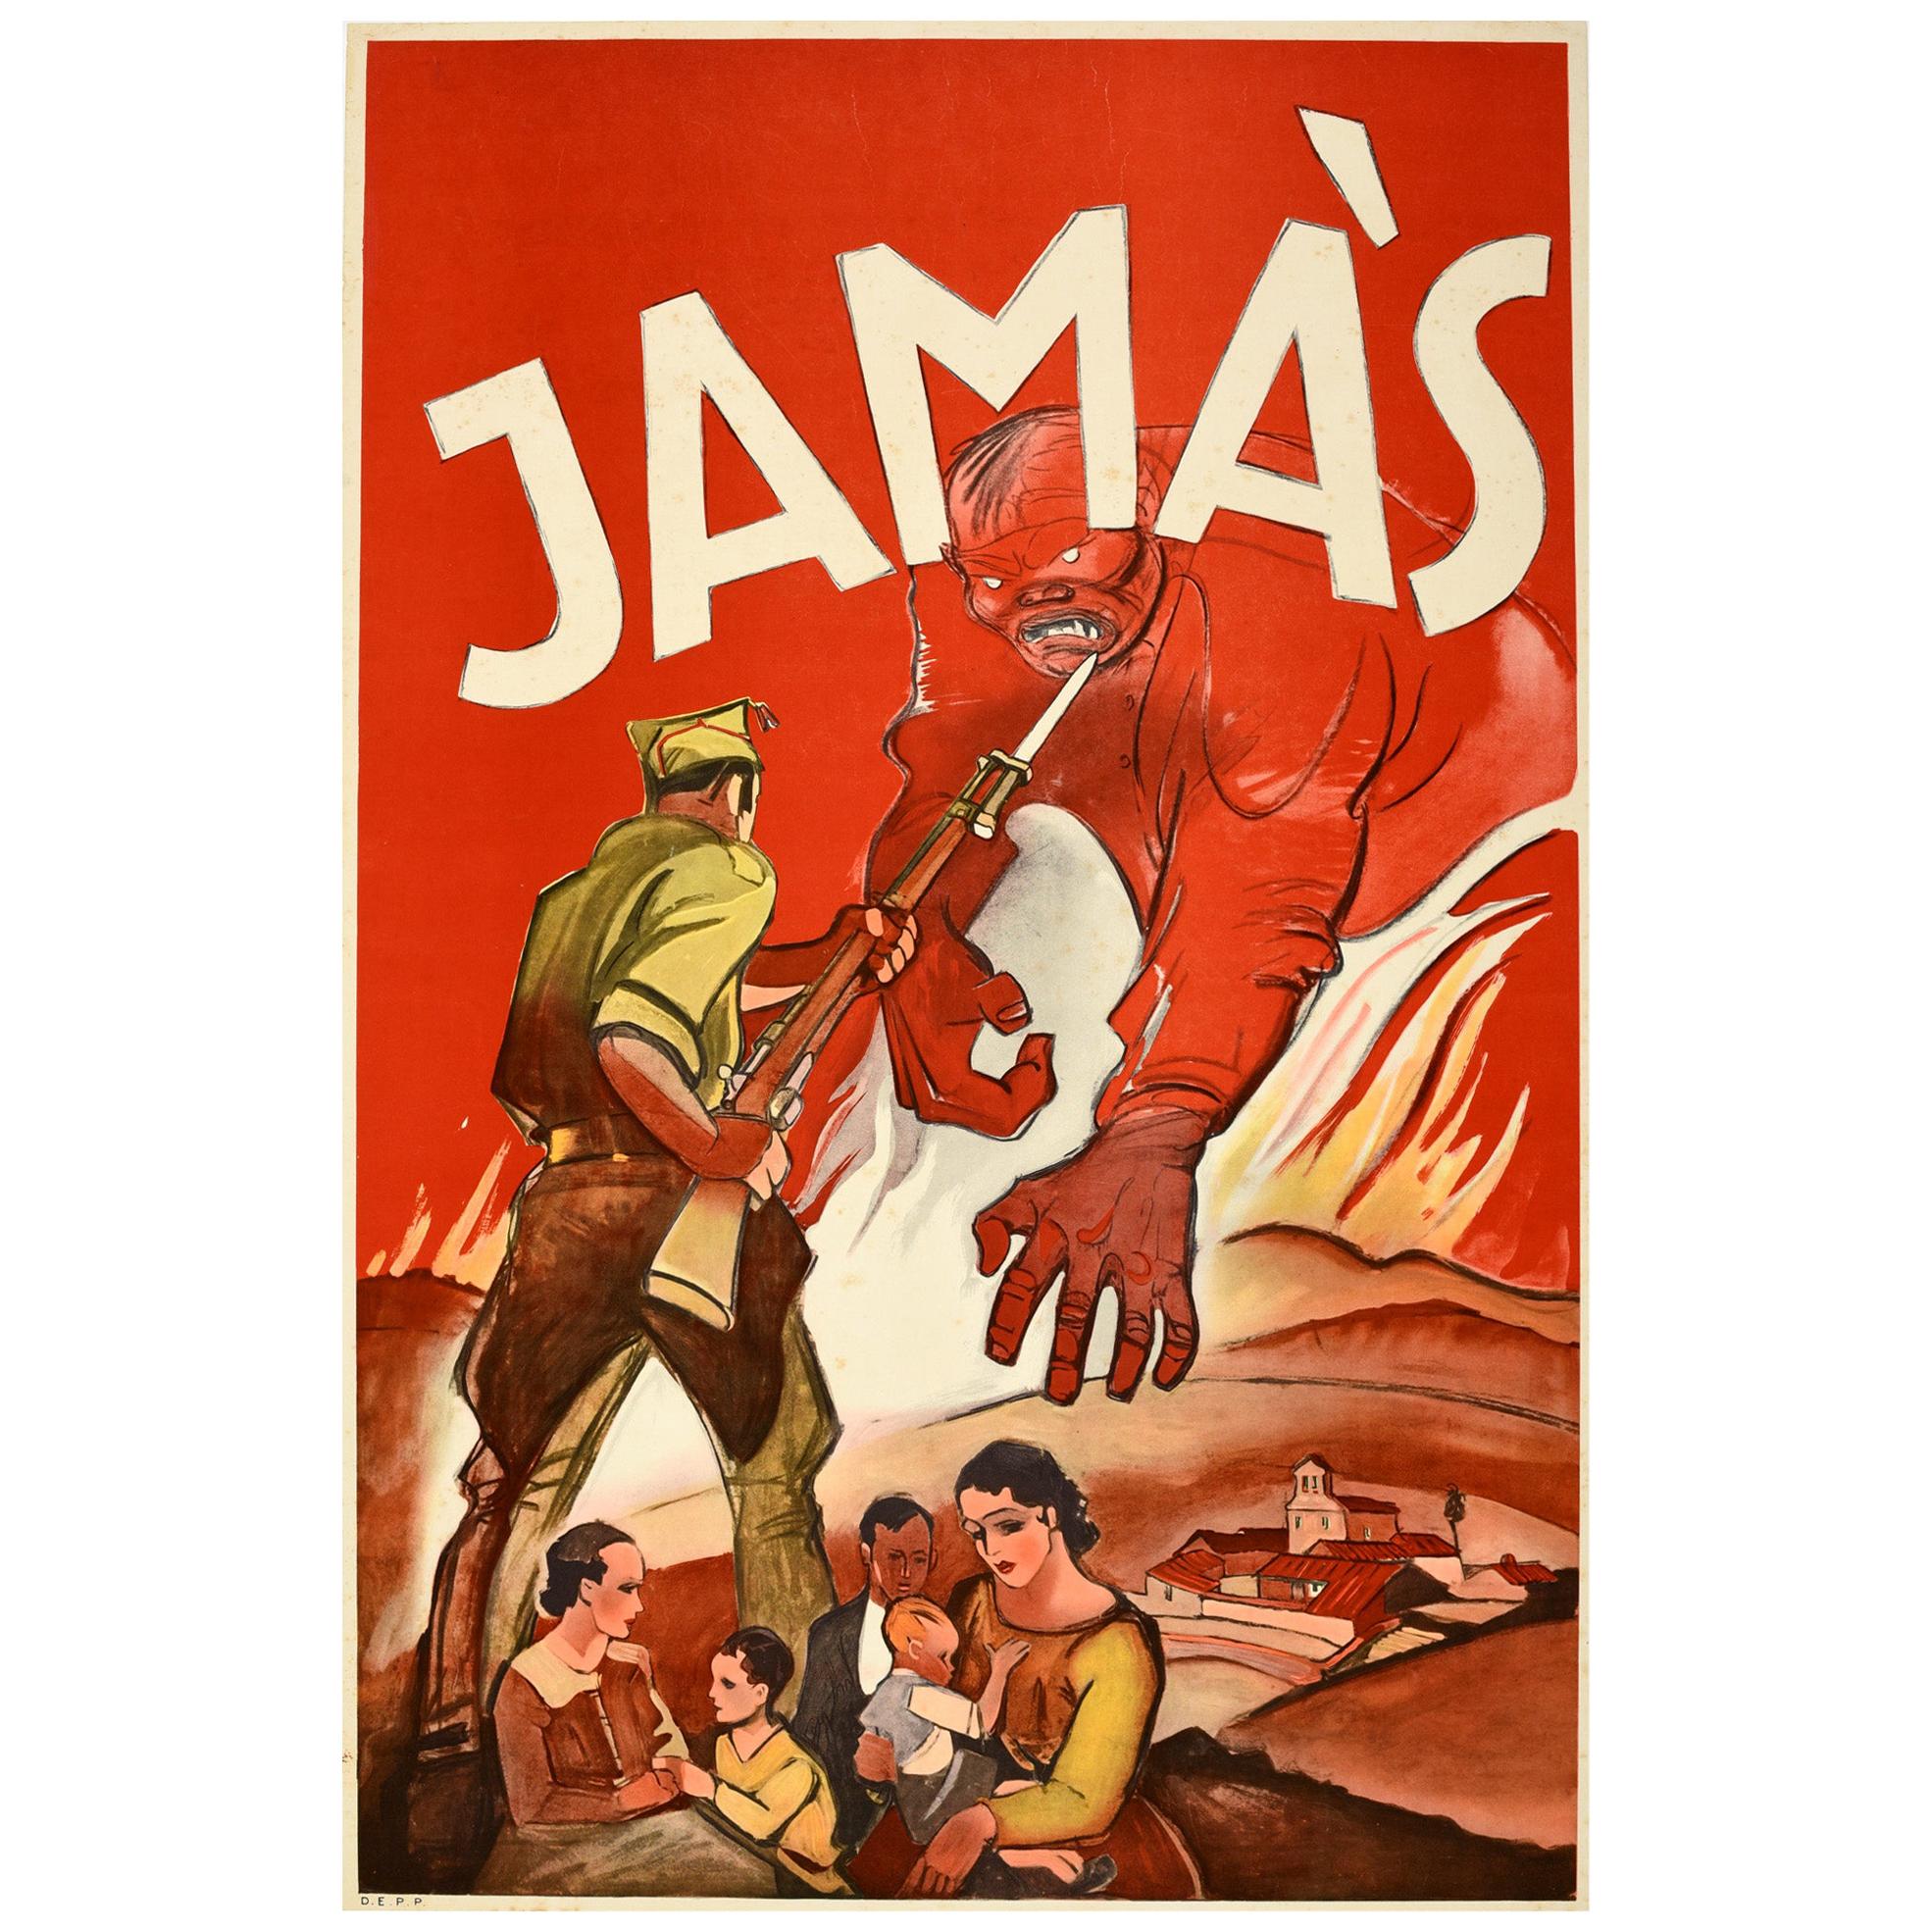 Original Vintage Anti Communist Spanish Civil War Propaganda Poster Jamas Never